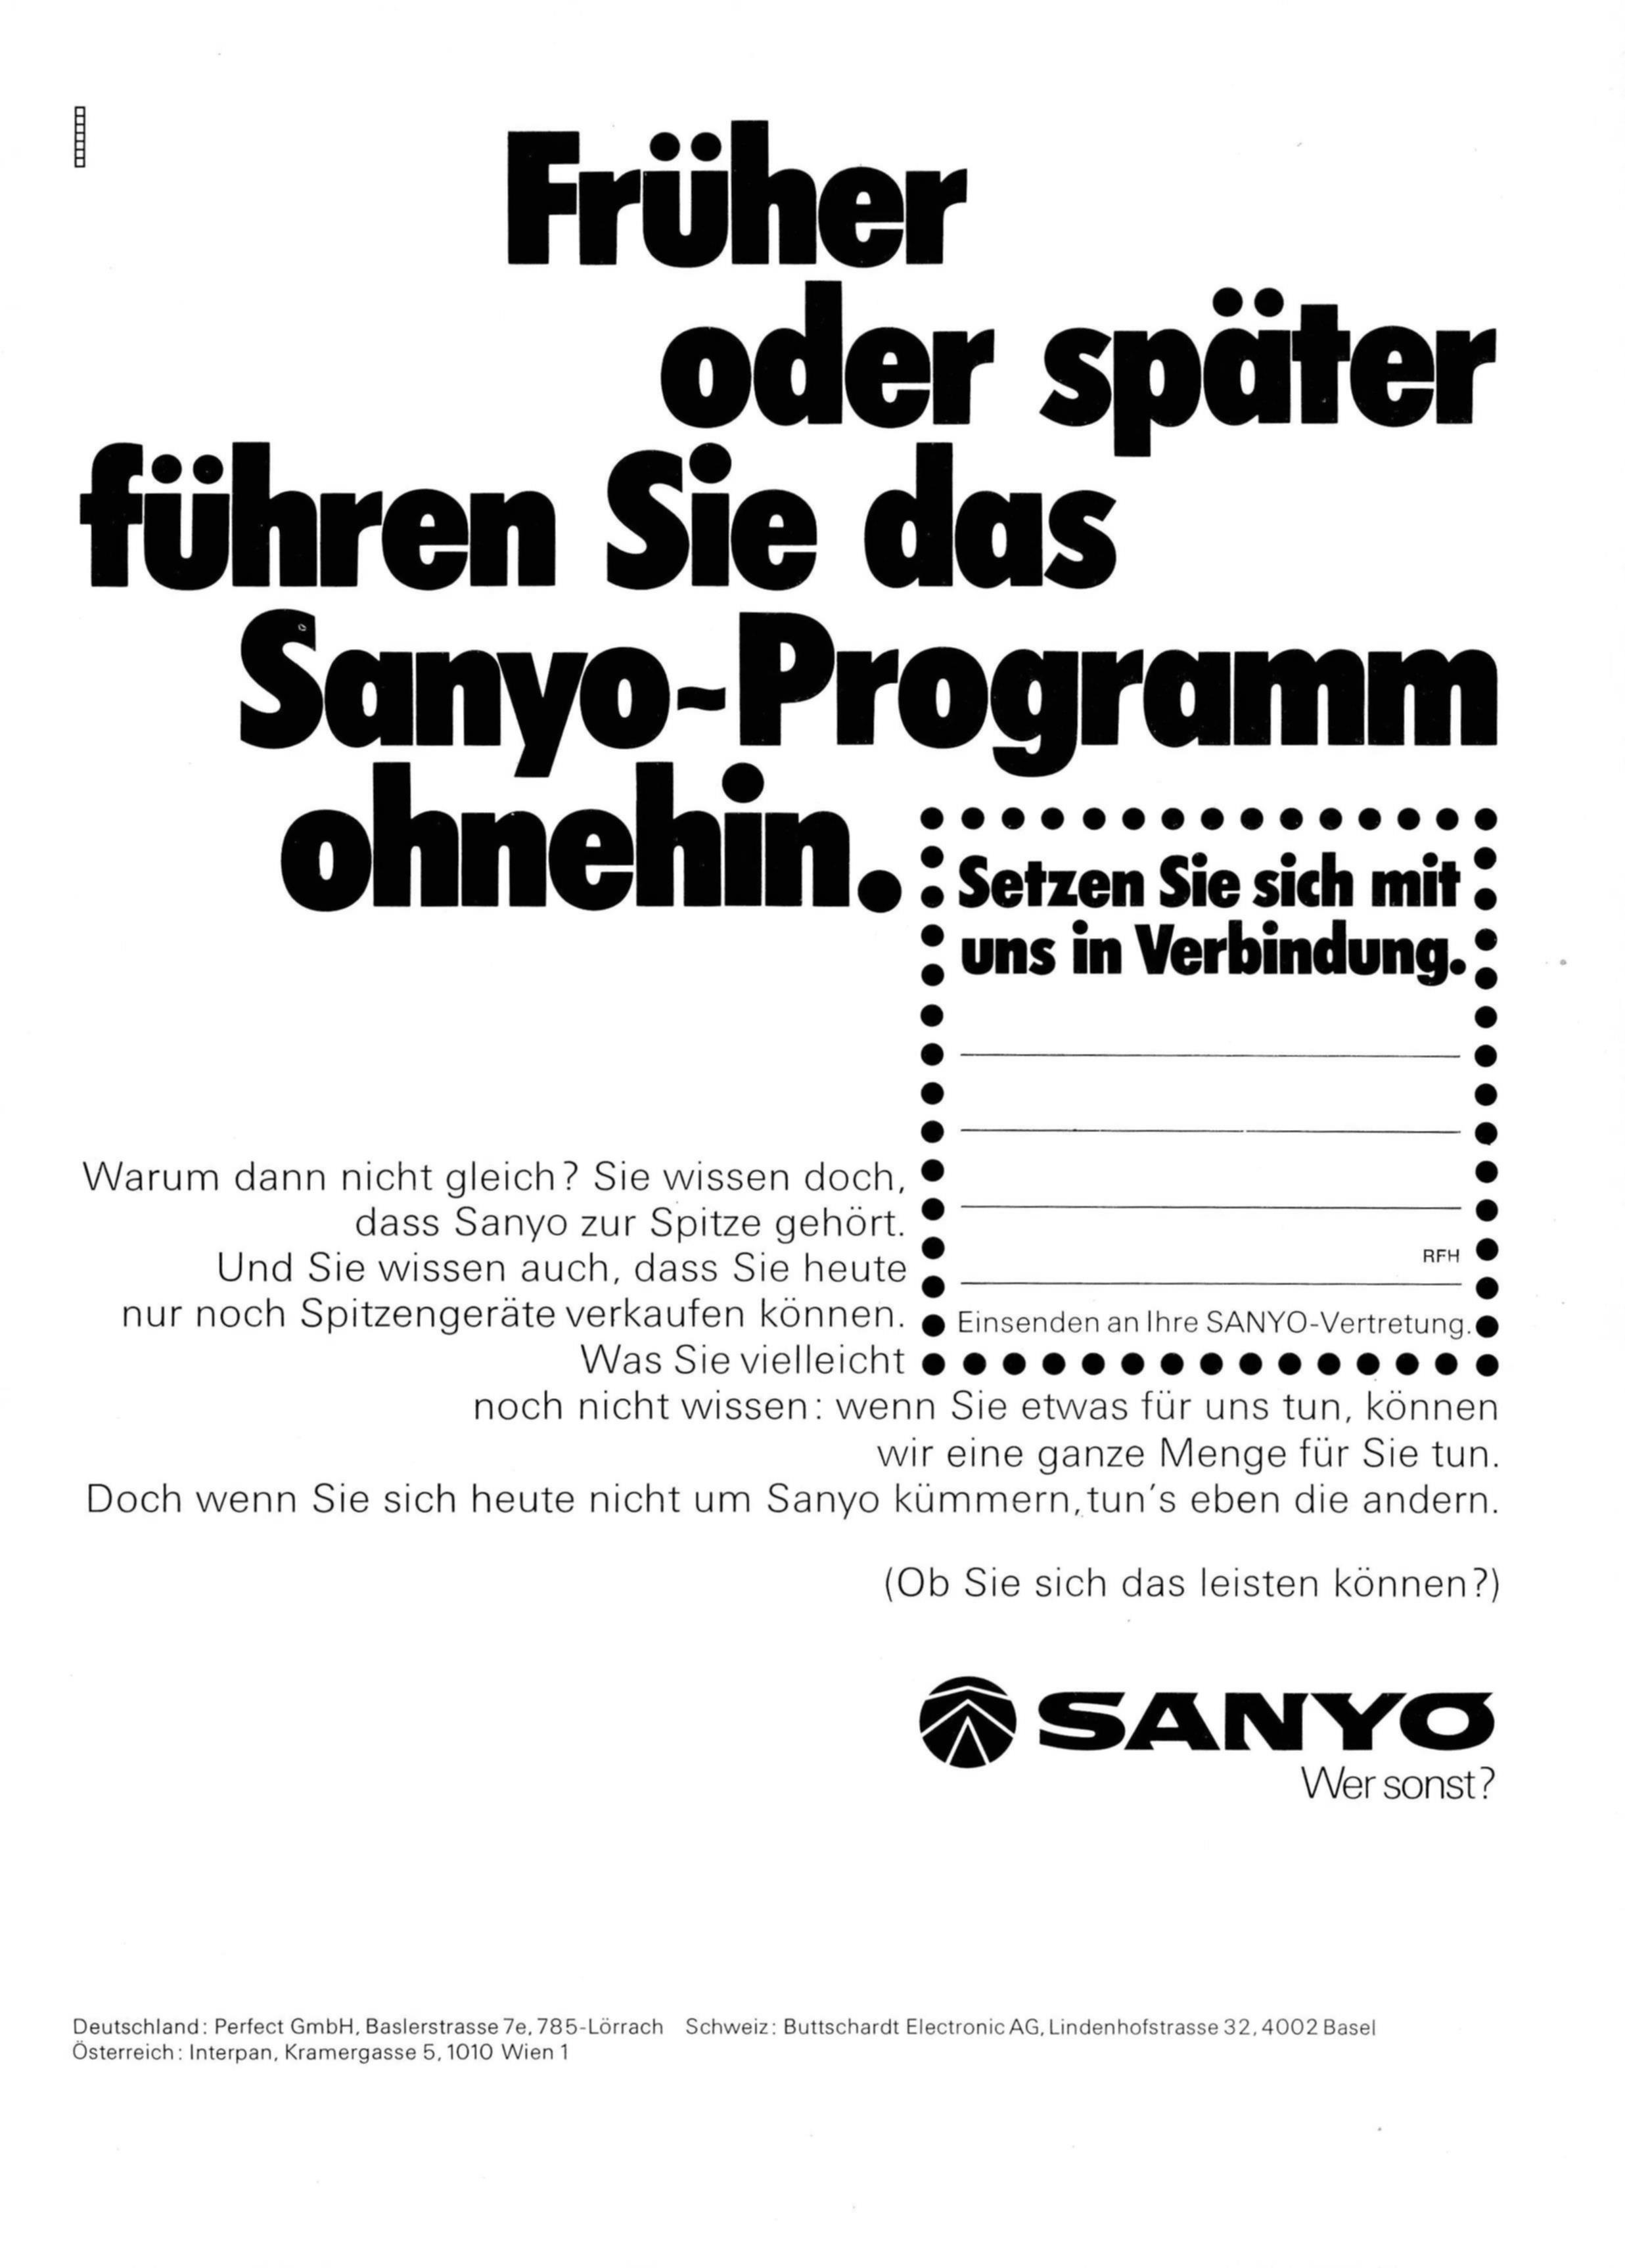 Sanyo 1973 033.jpg